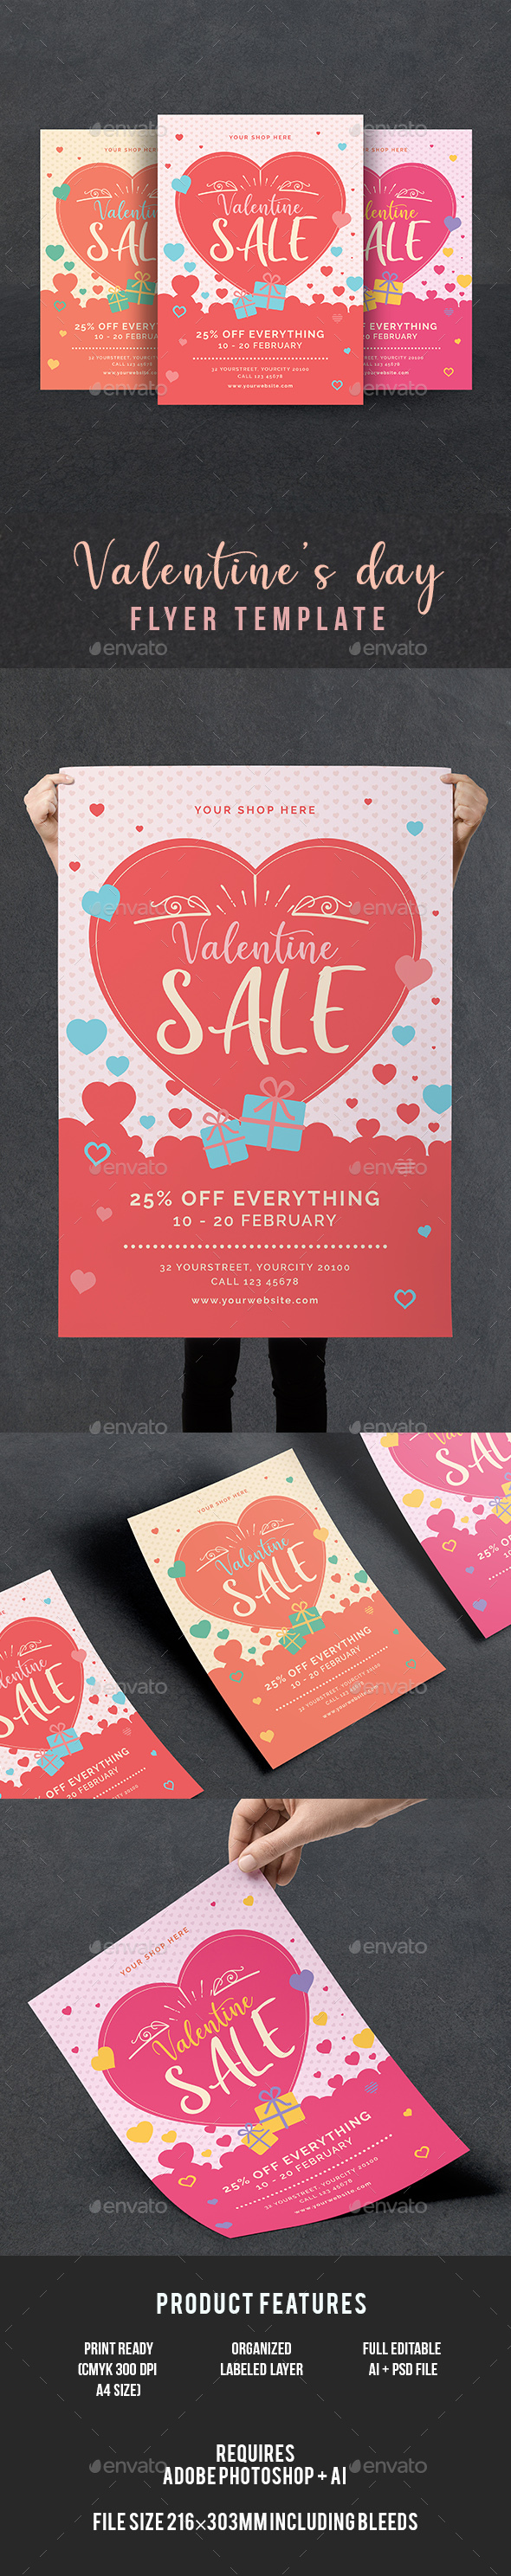 Valentines Sale Flyer